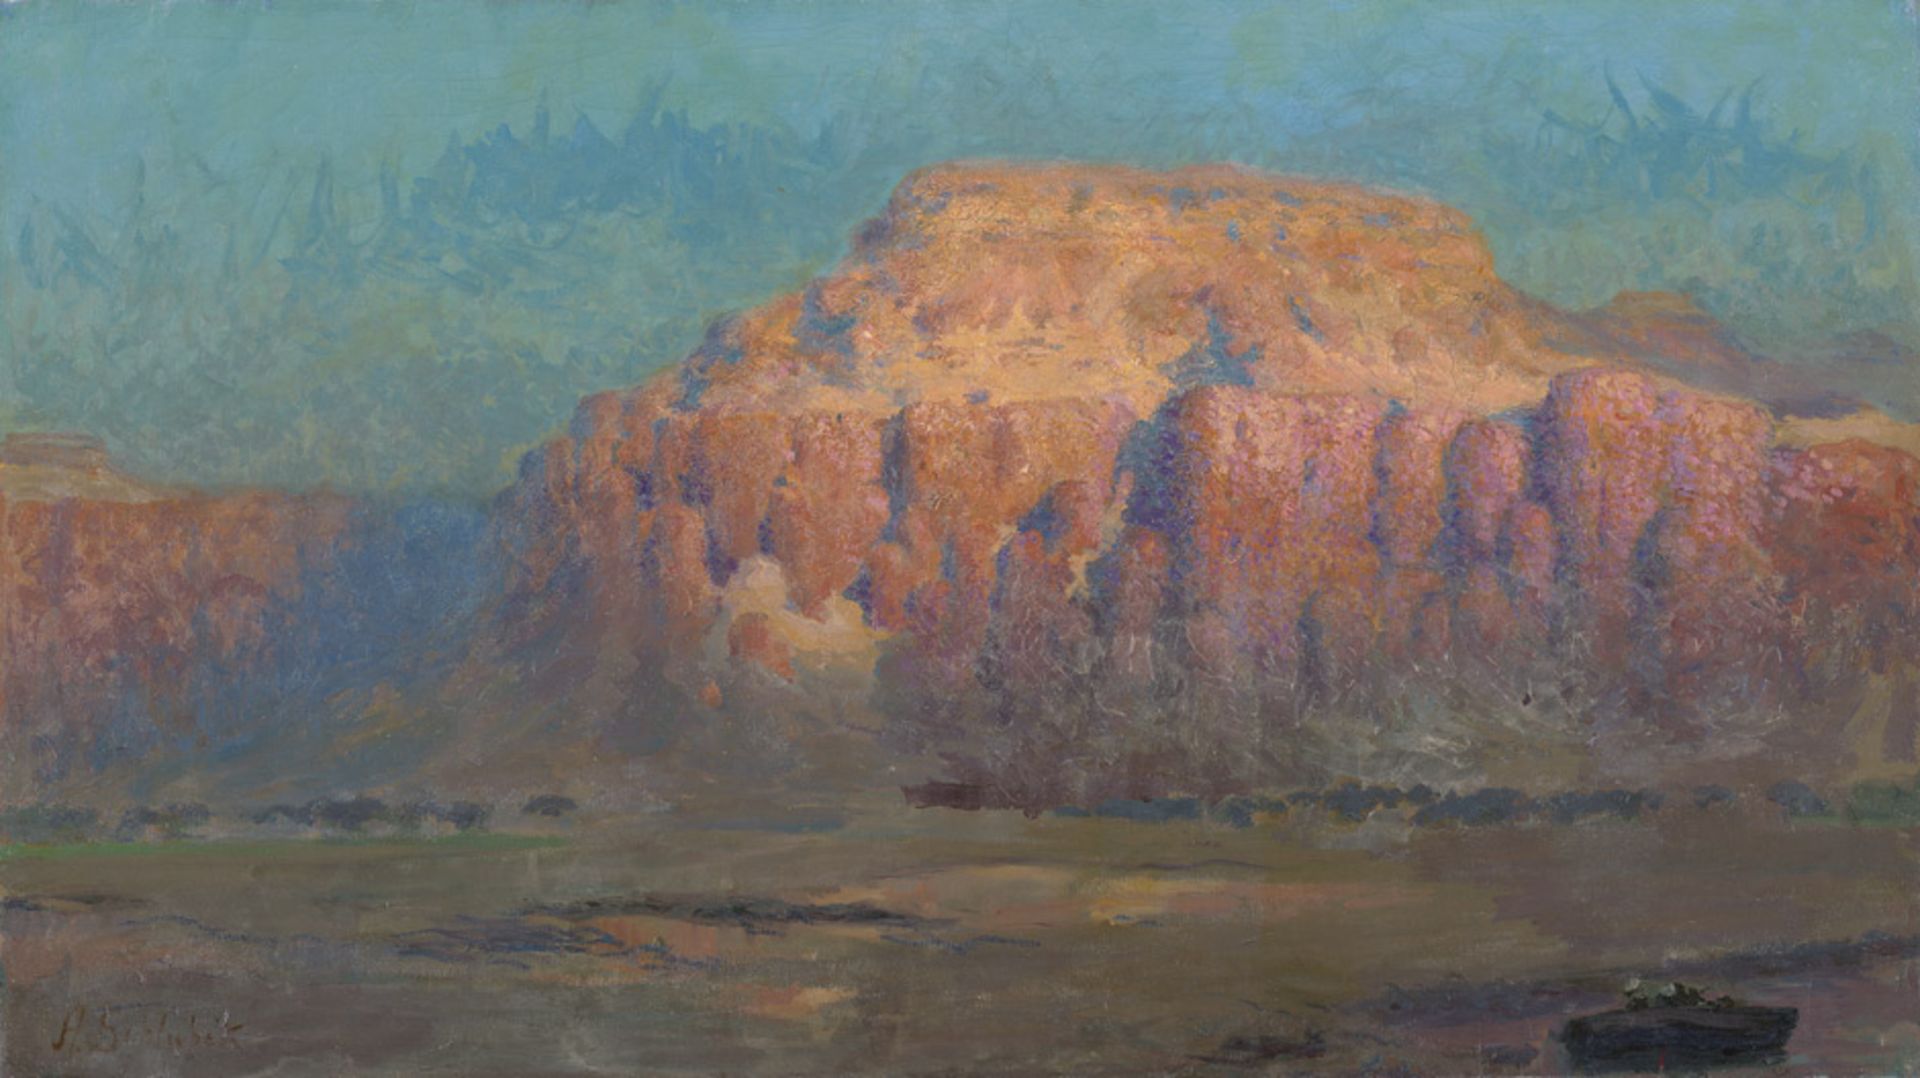 Schlubeck, Arthur: Der Ayers Rock (Uluru) in AustralienDer Ayers Rock (Uluru) im Uluru-Kata Tjuta